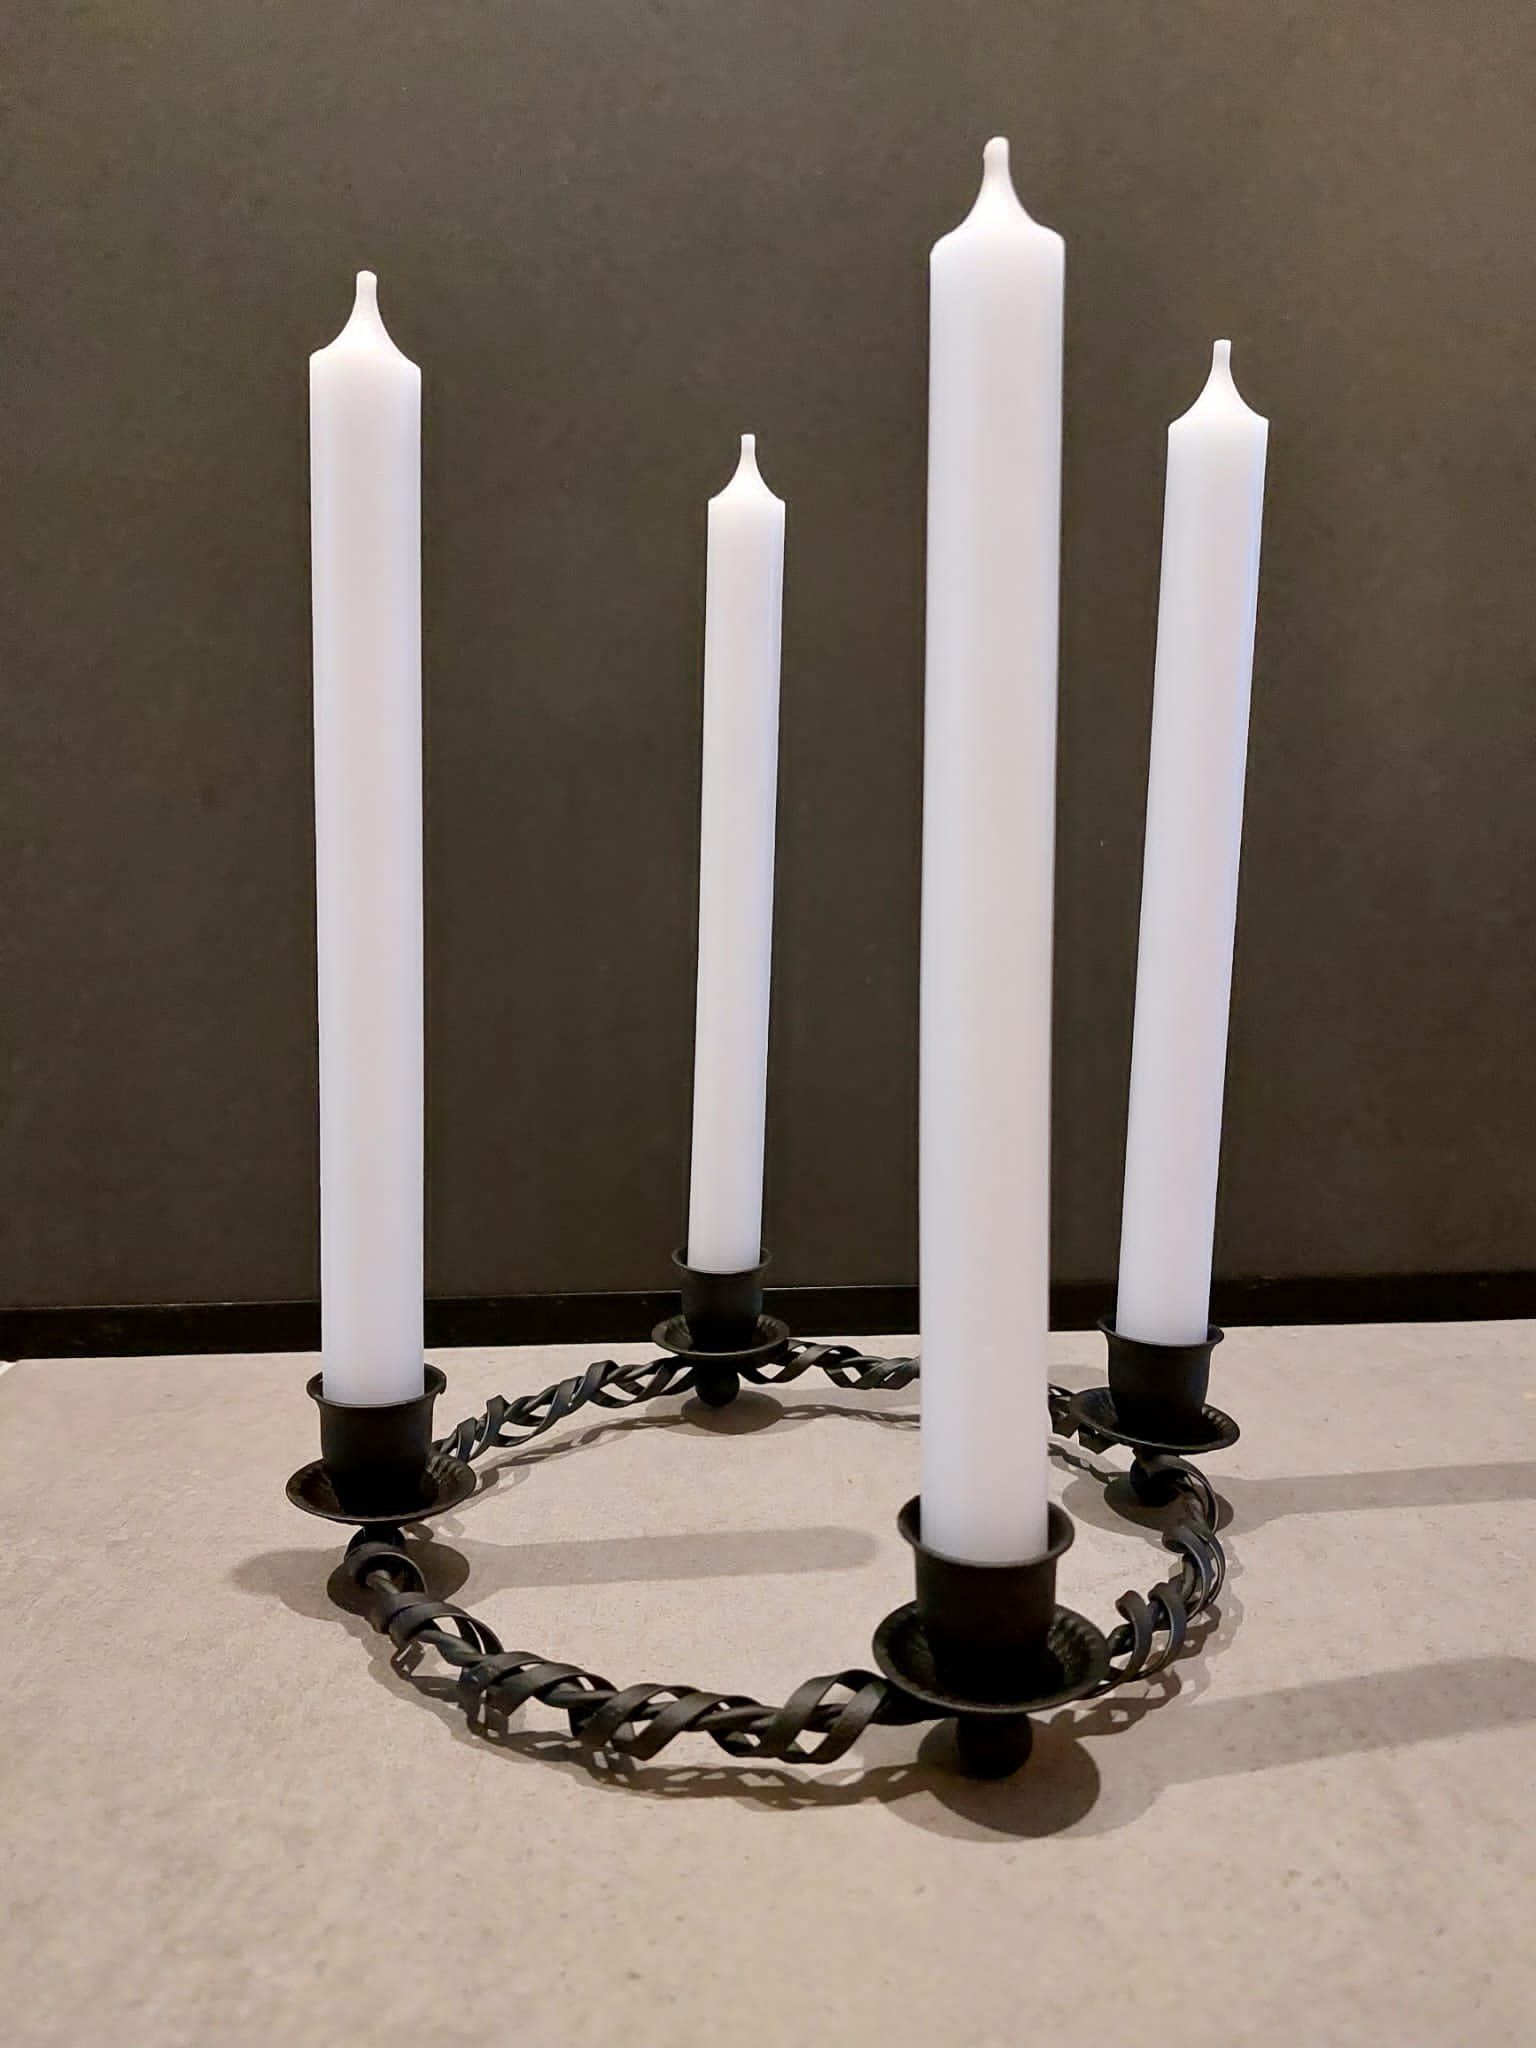 Vosteen Kerzenständer Adventskranz Kerzenkranz inkl. 4 weiße Kerzen  Tischdeko schwarz Metall (5 teilig, Kerzenhalter mit 4 Kerzen), vintage  Kerzenring